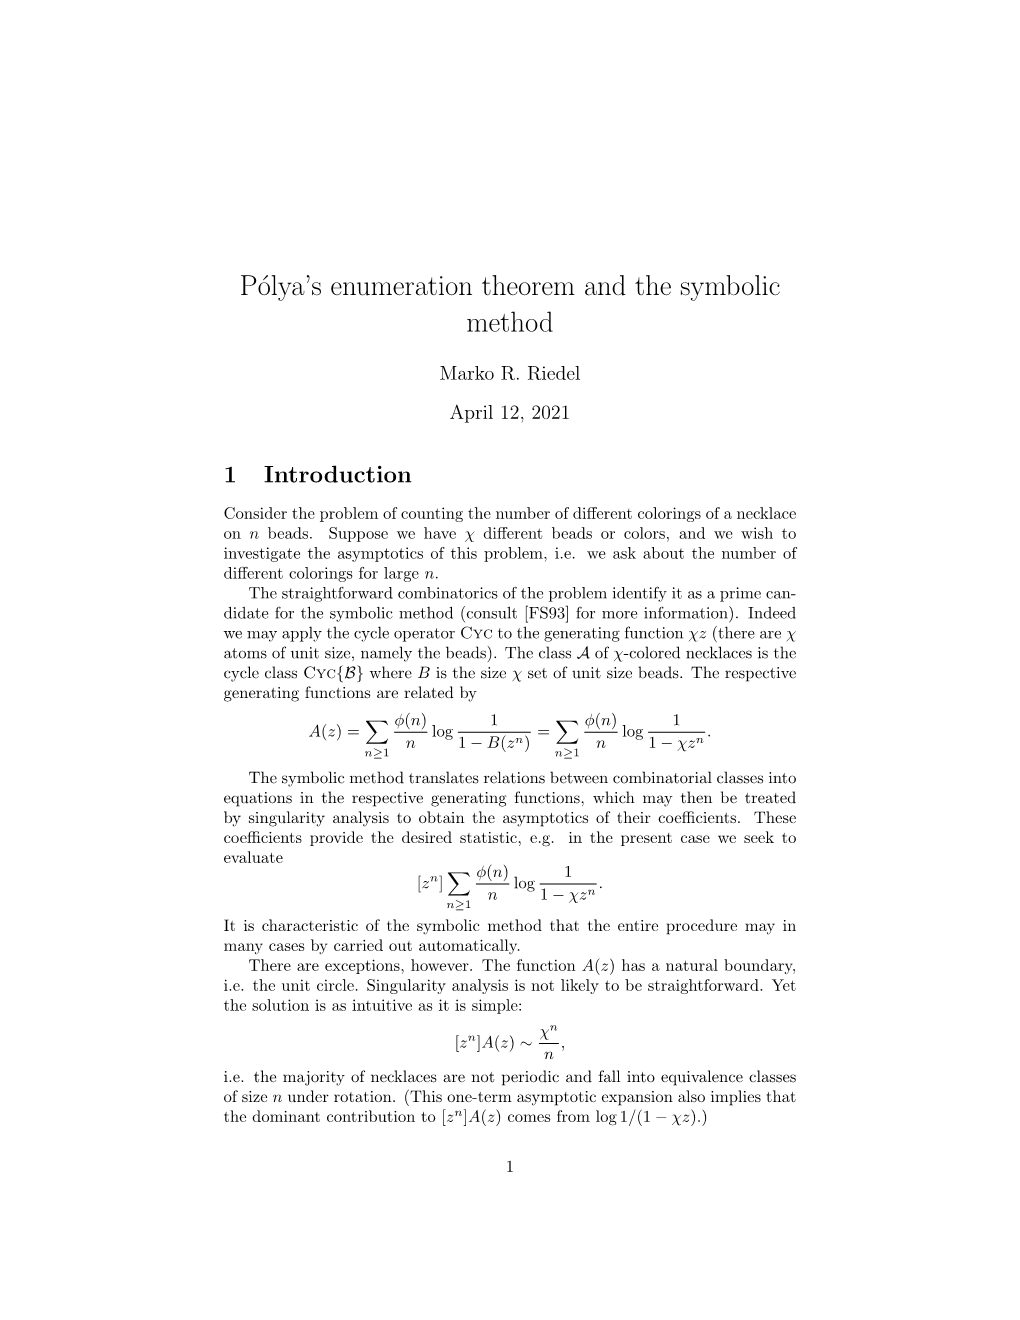 Pólya's Enumeration Theorem and the Symbolic Method